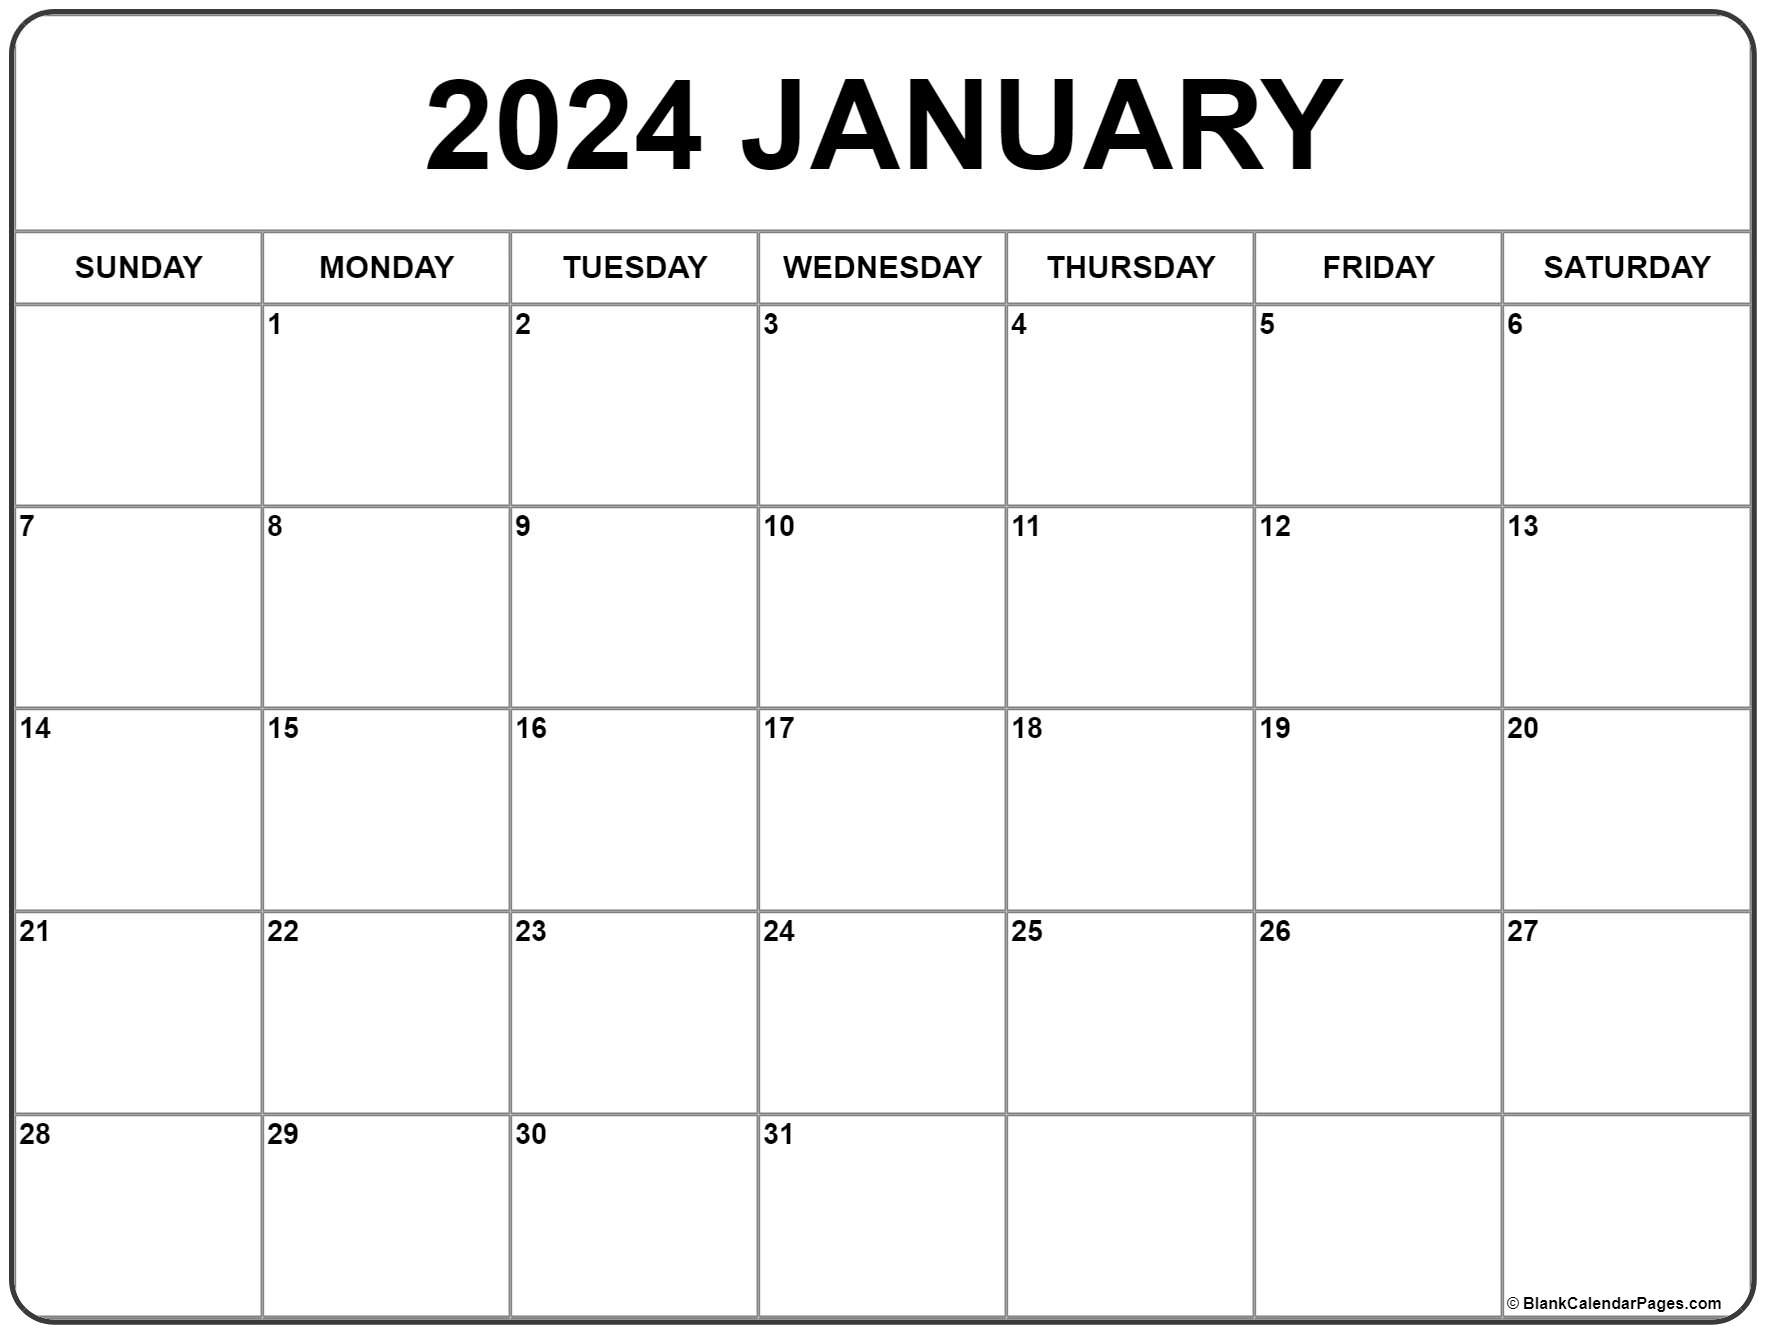 January 2024 Calendar | Free Printable Calendar for Printable January 2024 Calendar